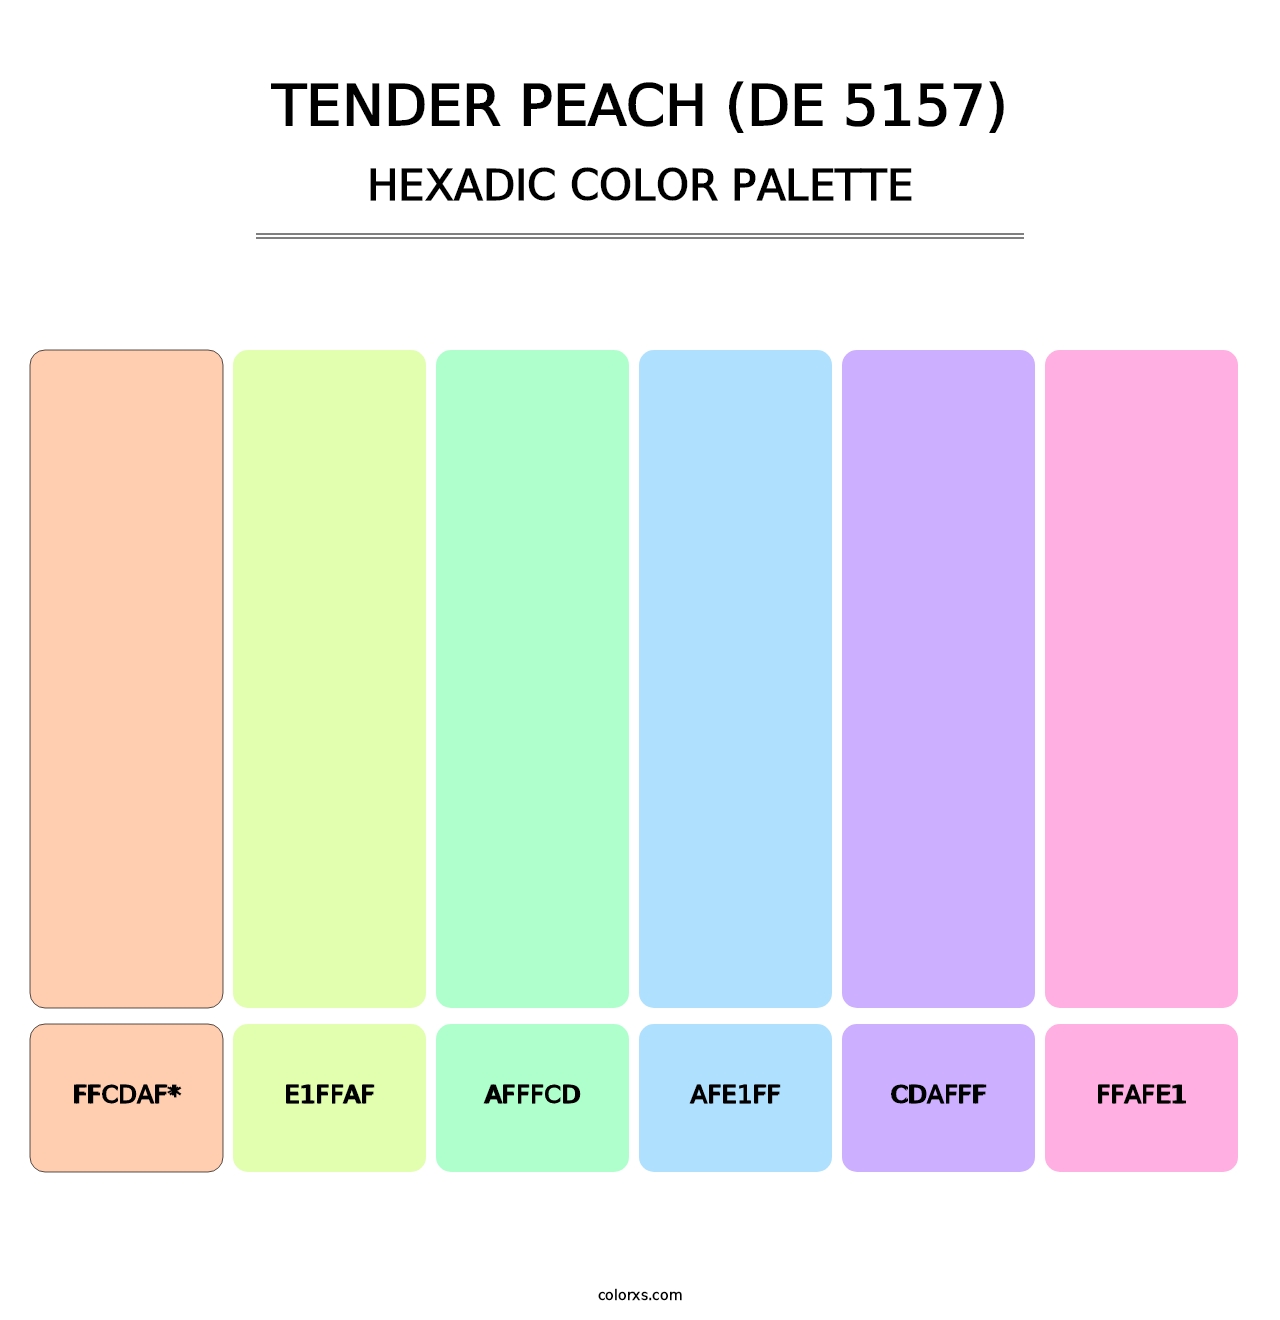 Tender Peach (DE 5157) - Hexadic Color Palette